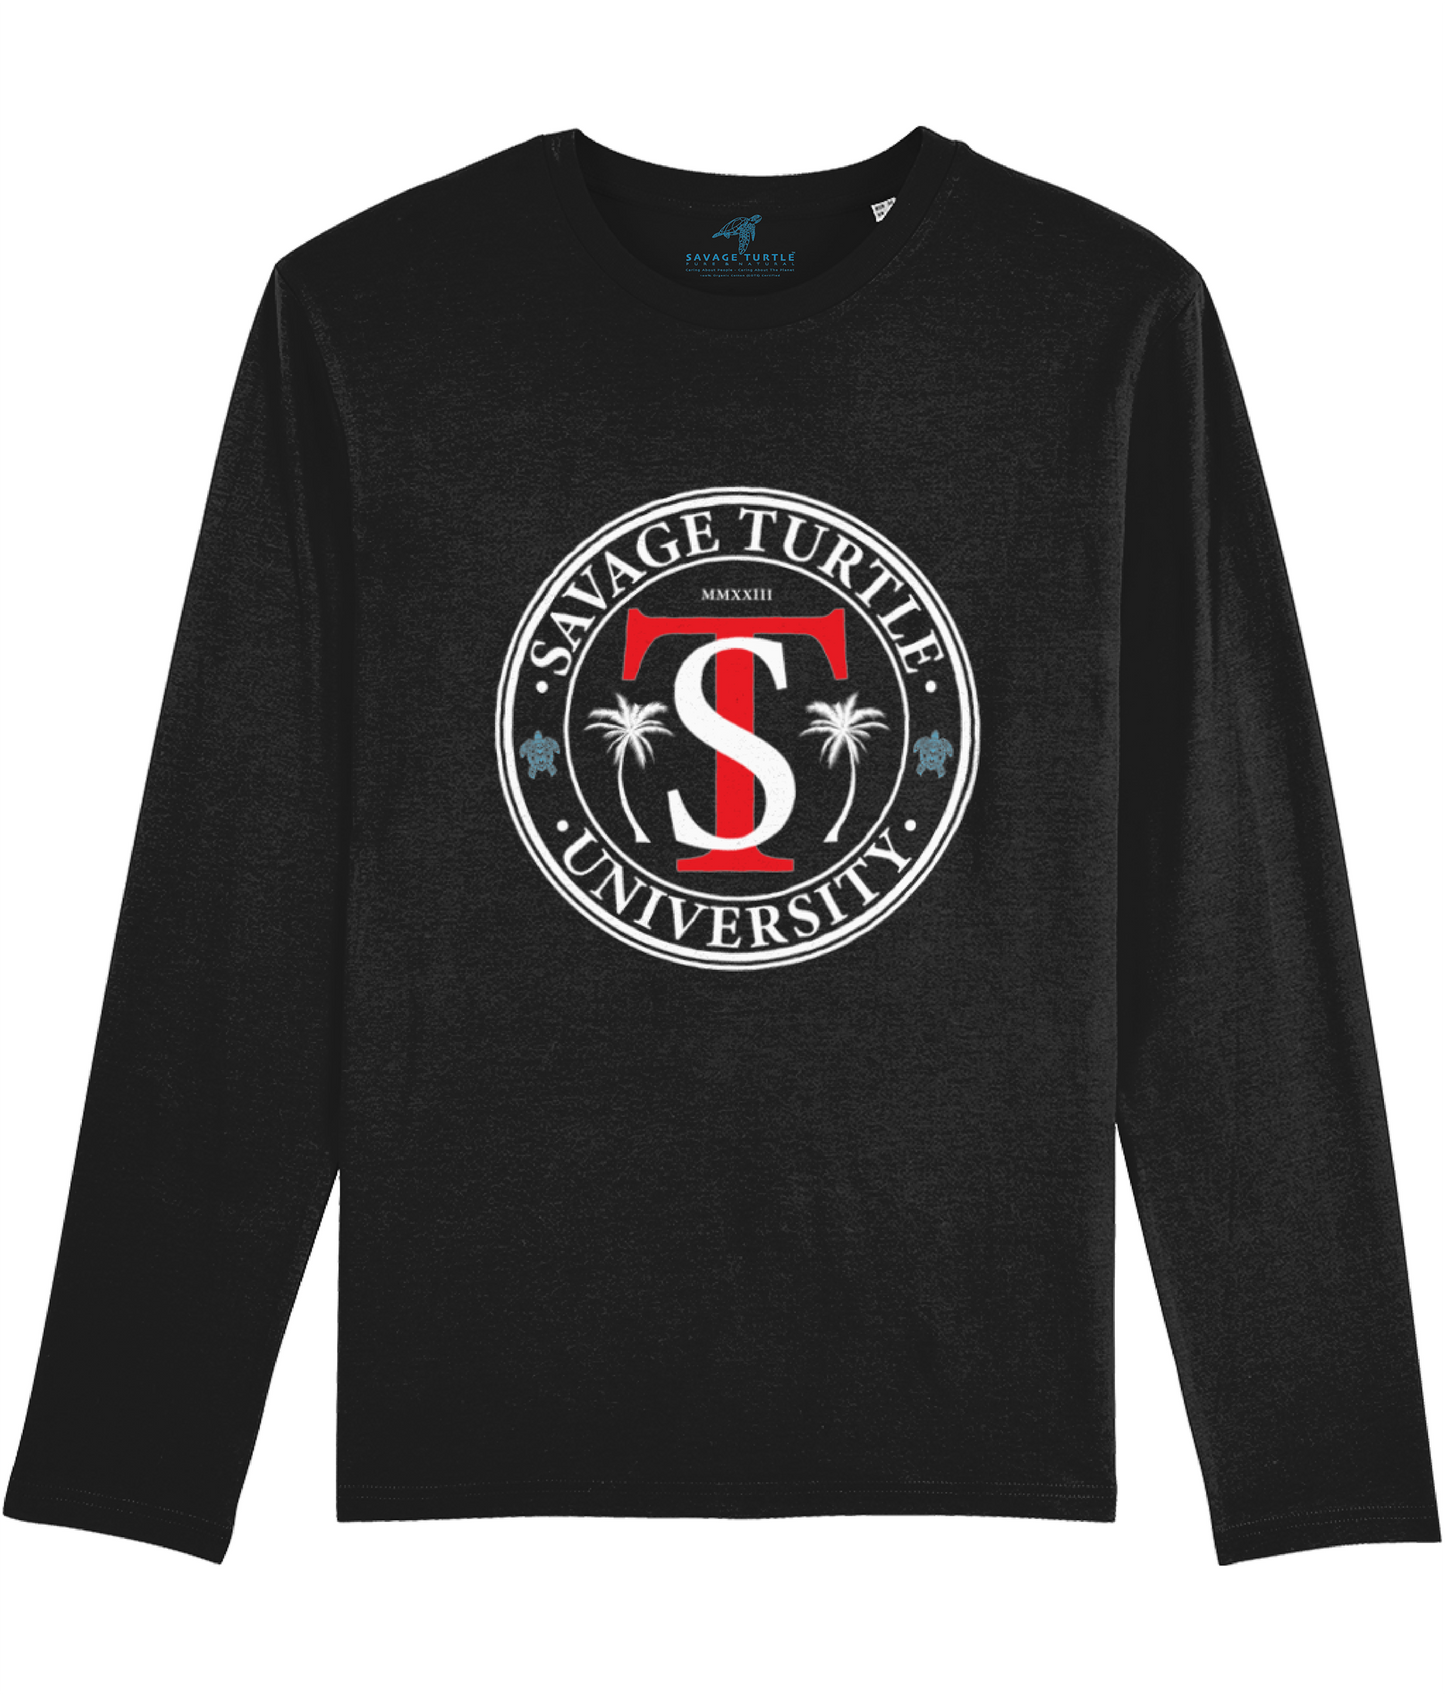 T-shirt Longsleeve Black Savage Turtle University